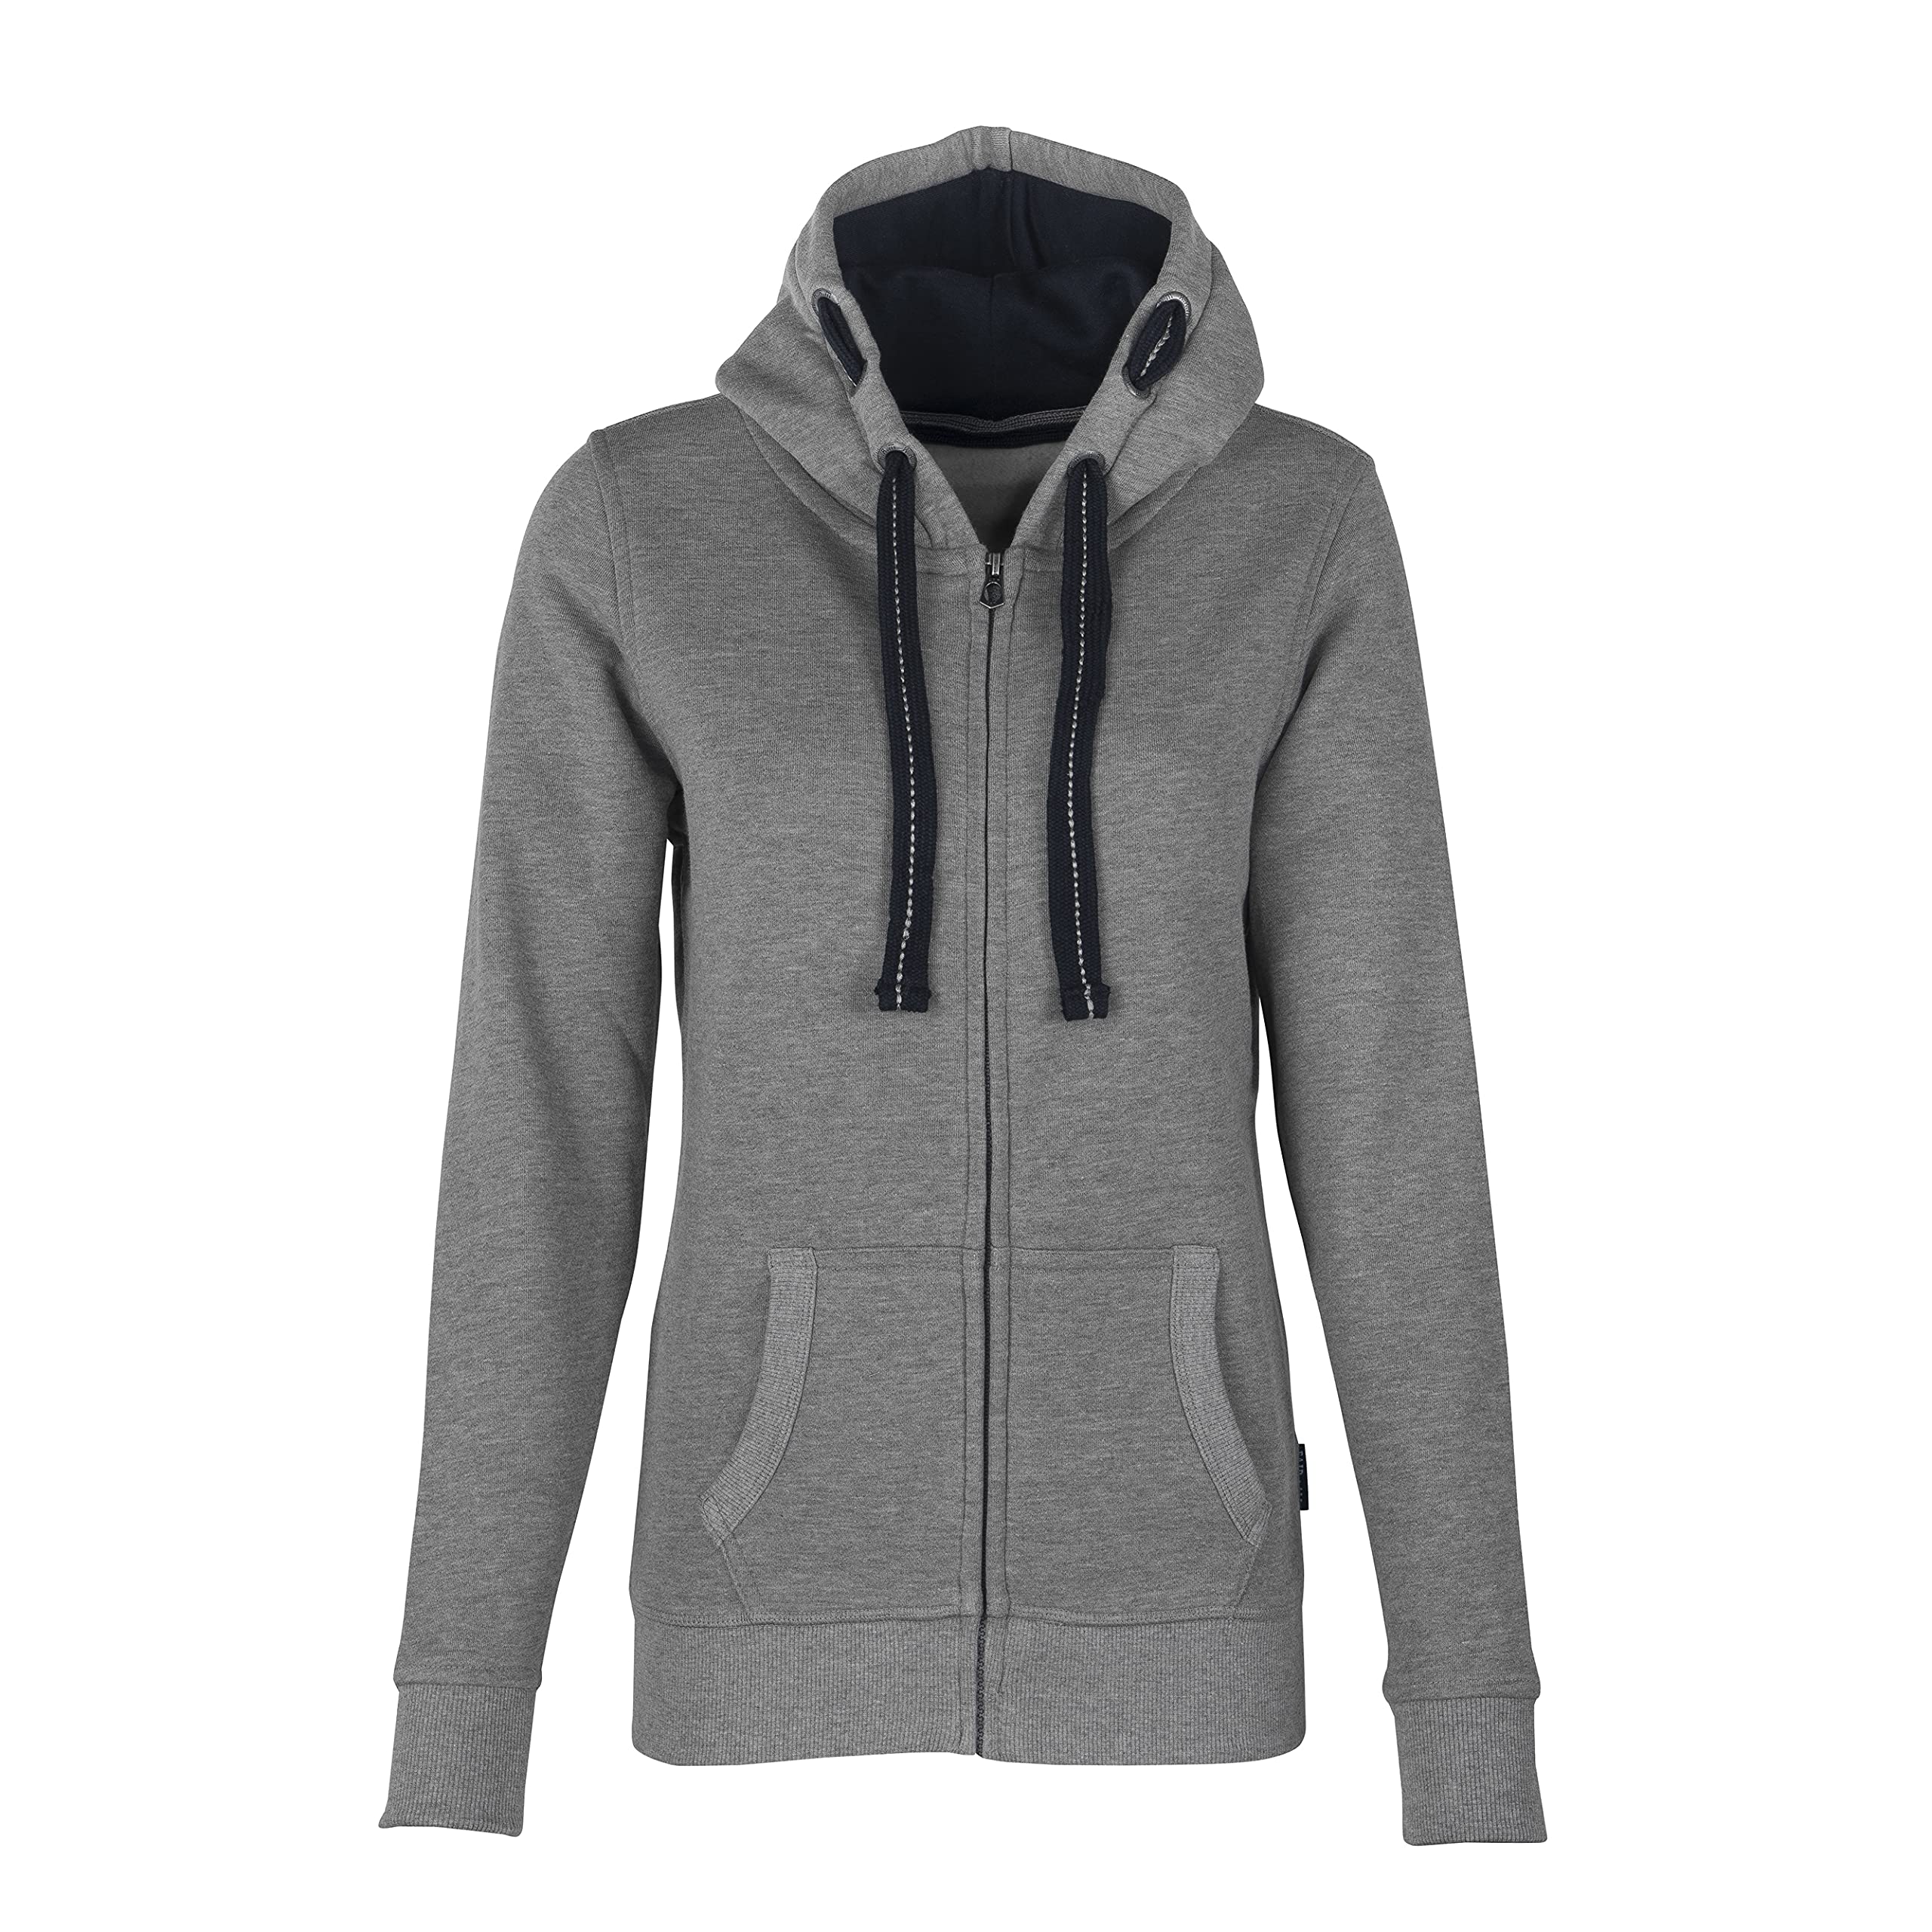 HRM Damen Jacket F hoodie, Grau-meliert, 4XL EU